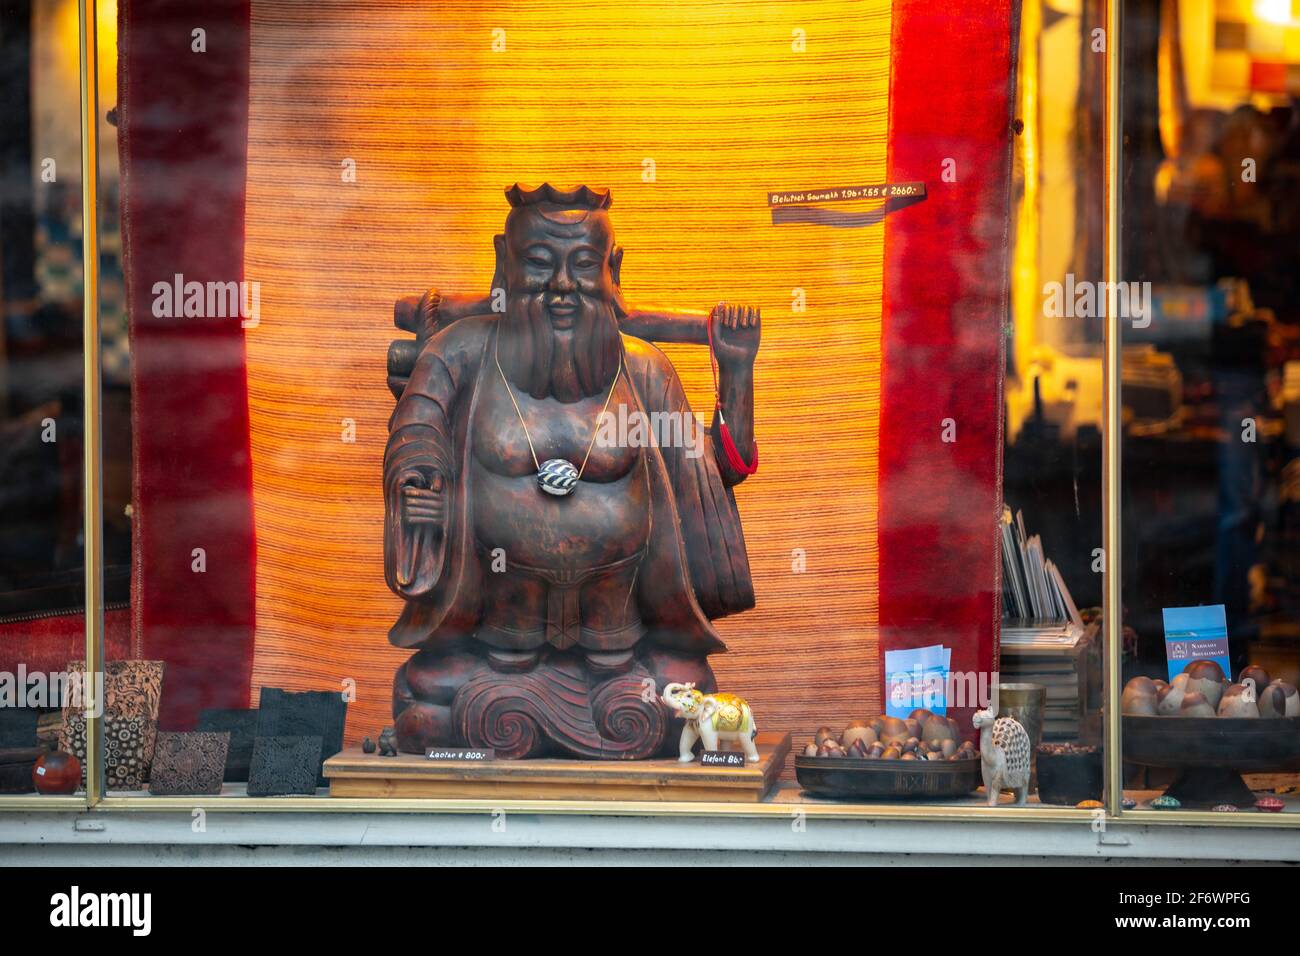 Lao-tzu or Laozi Statue on a window shop in Lindau, Germany Stock Photo